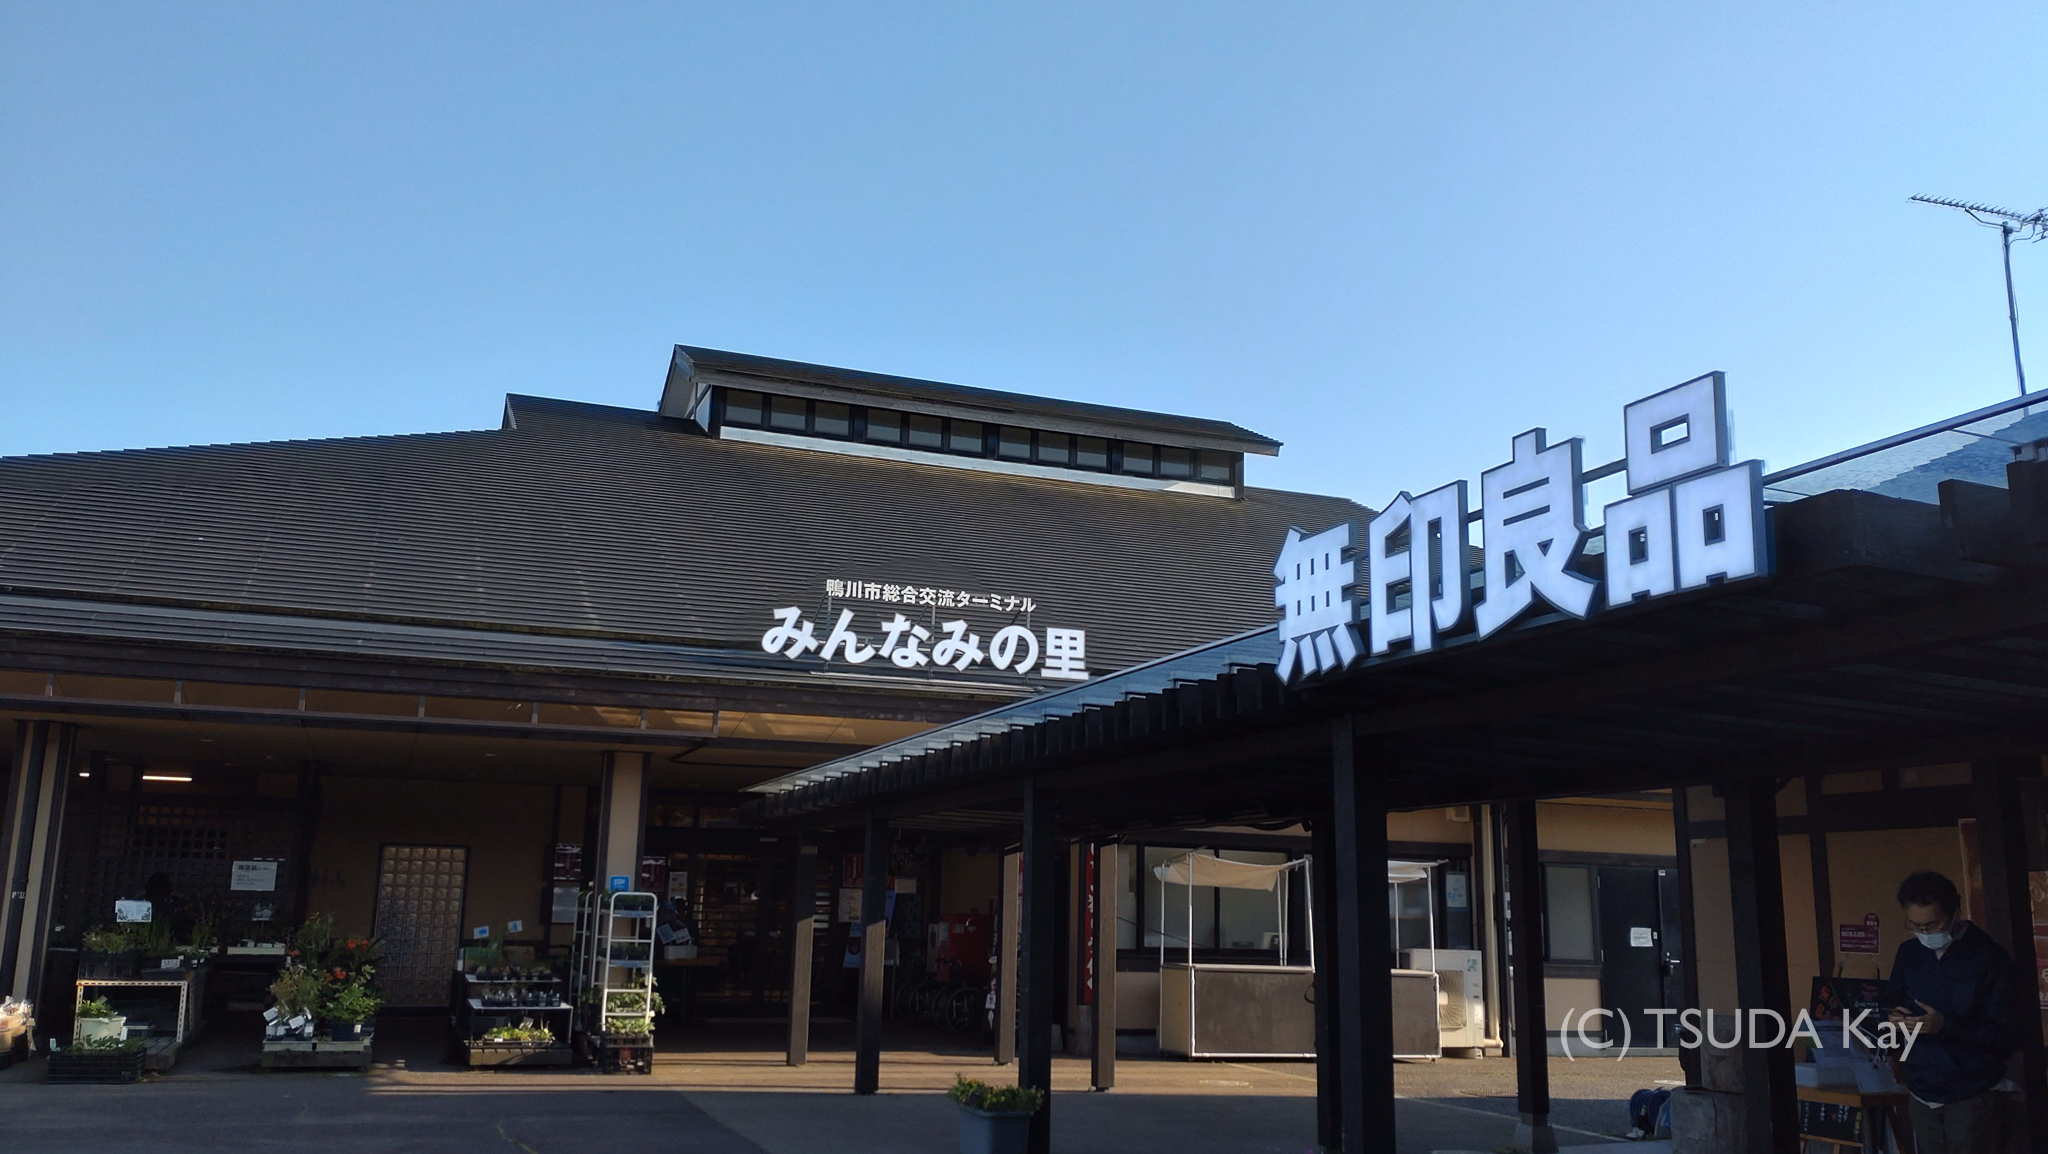 I visited kamogawa 07